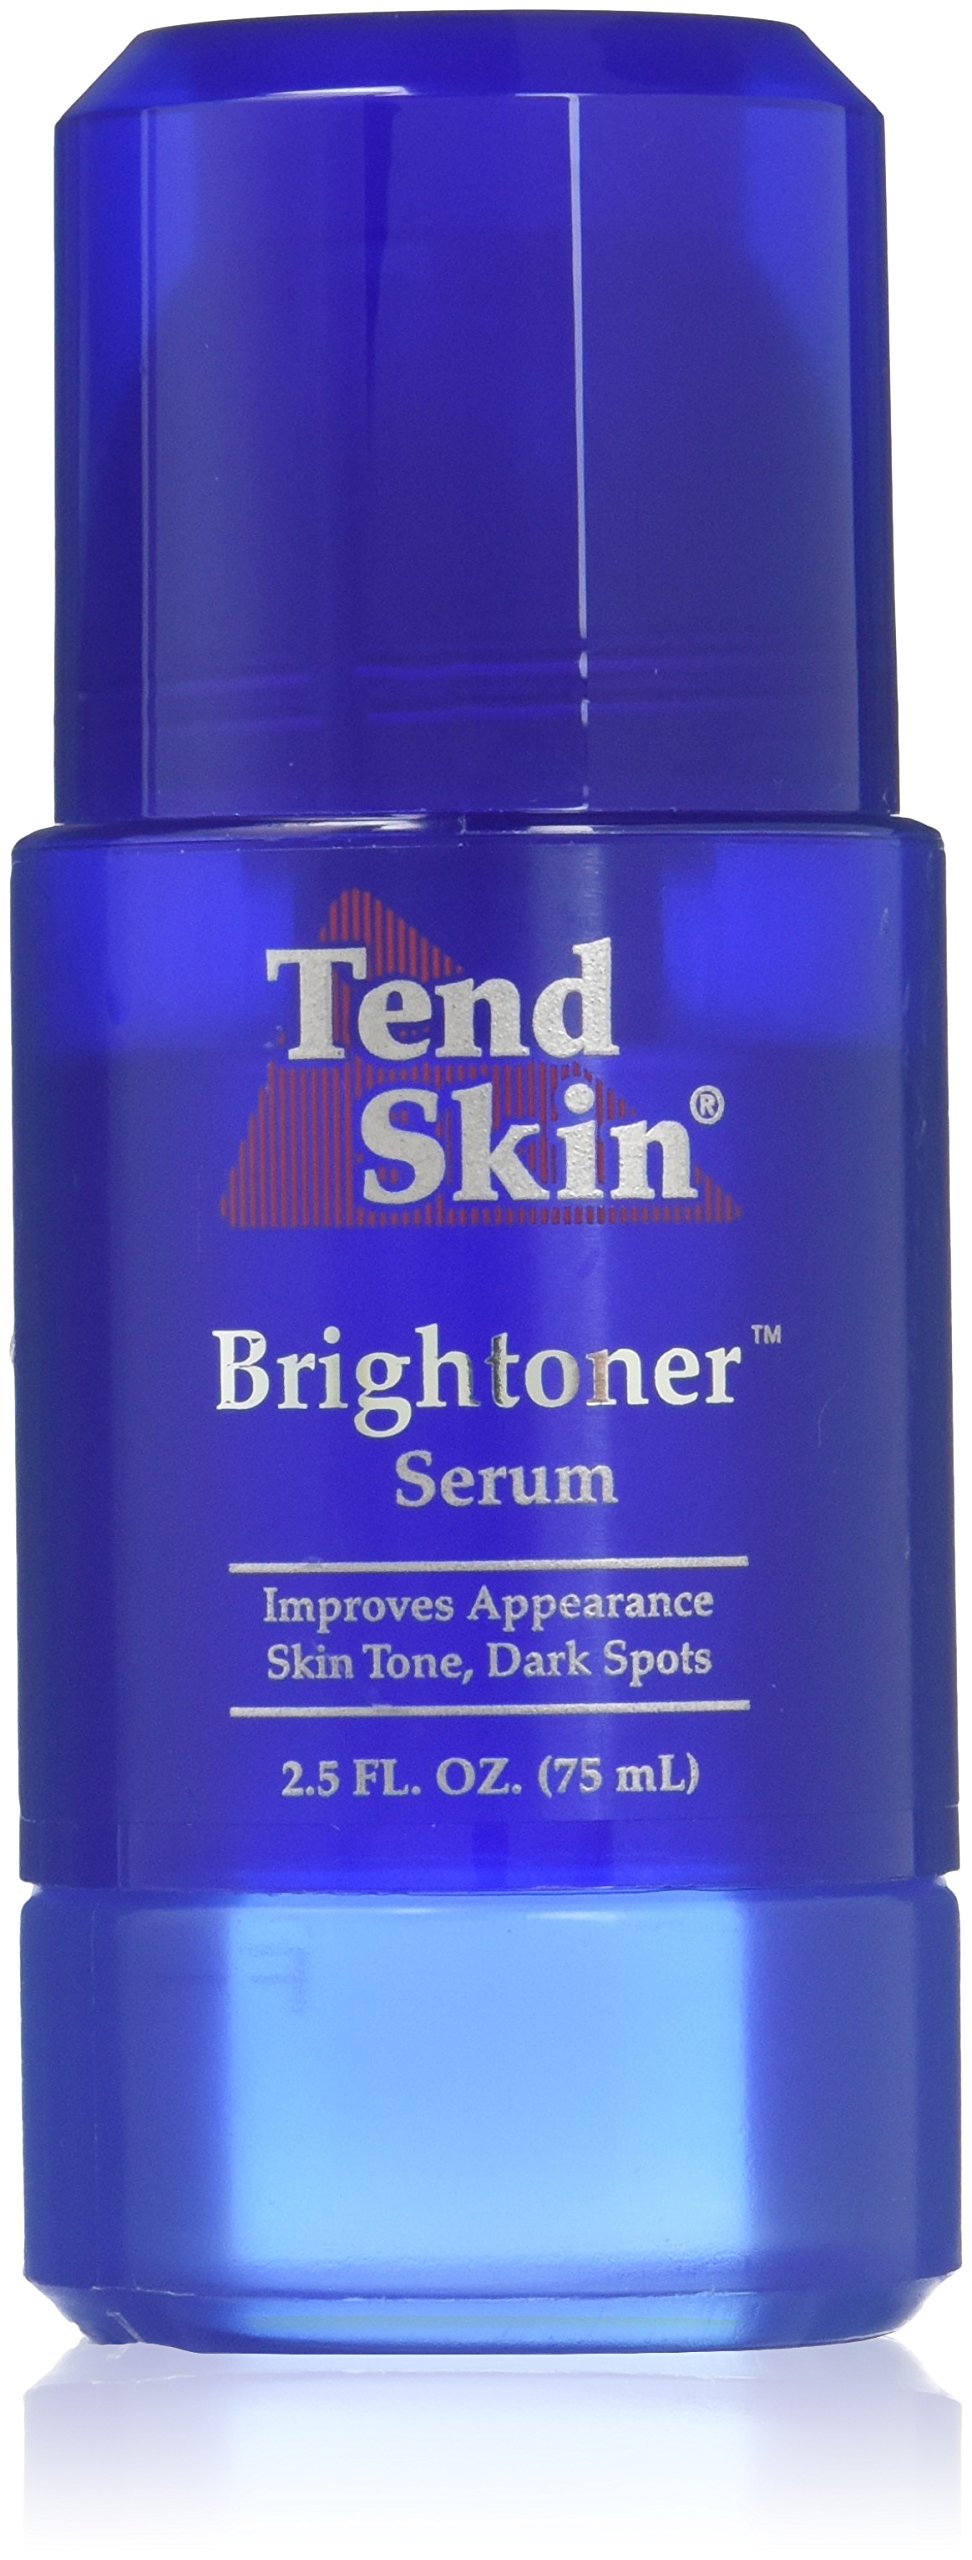 Tend Skin Brightoner Serum Roll on, 2.5 ounce